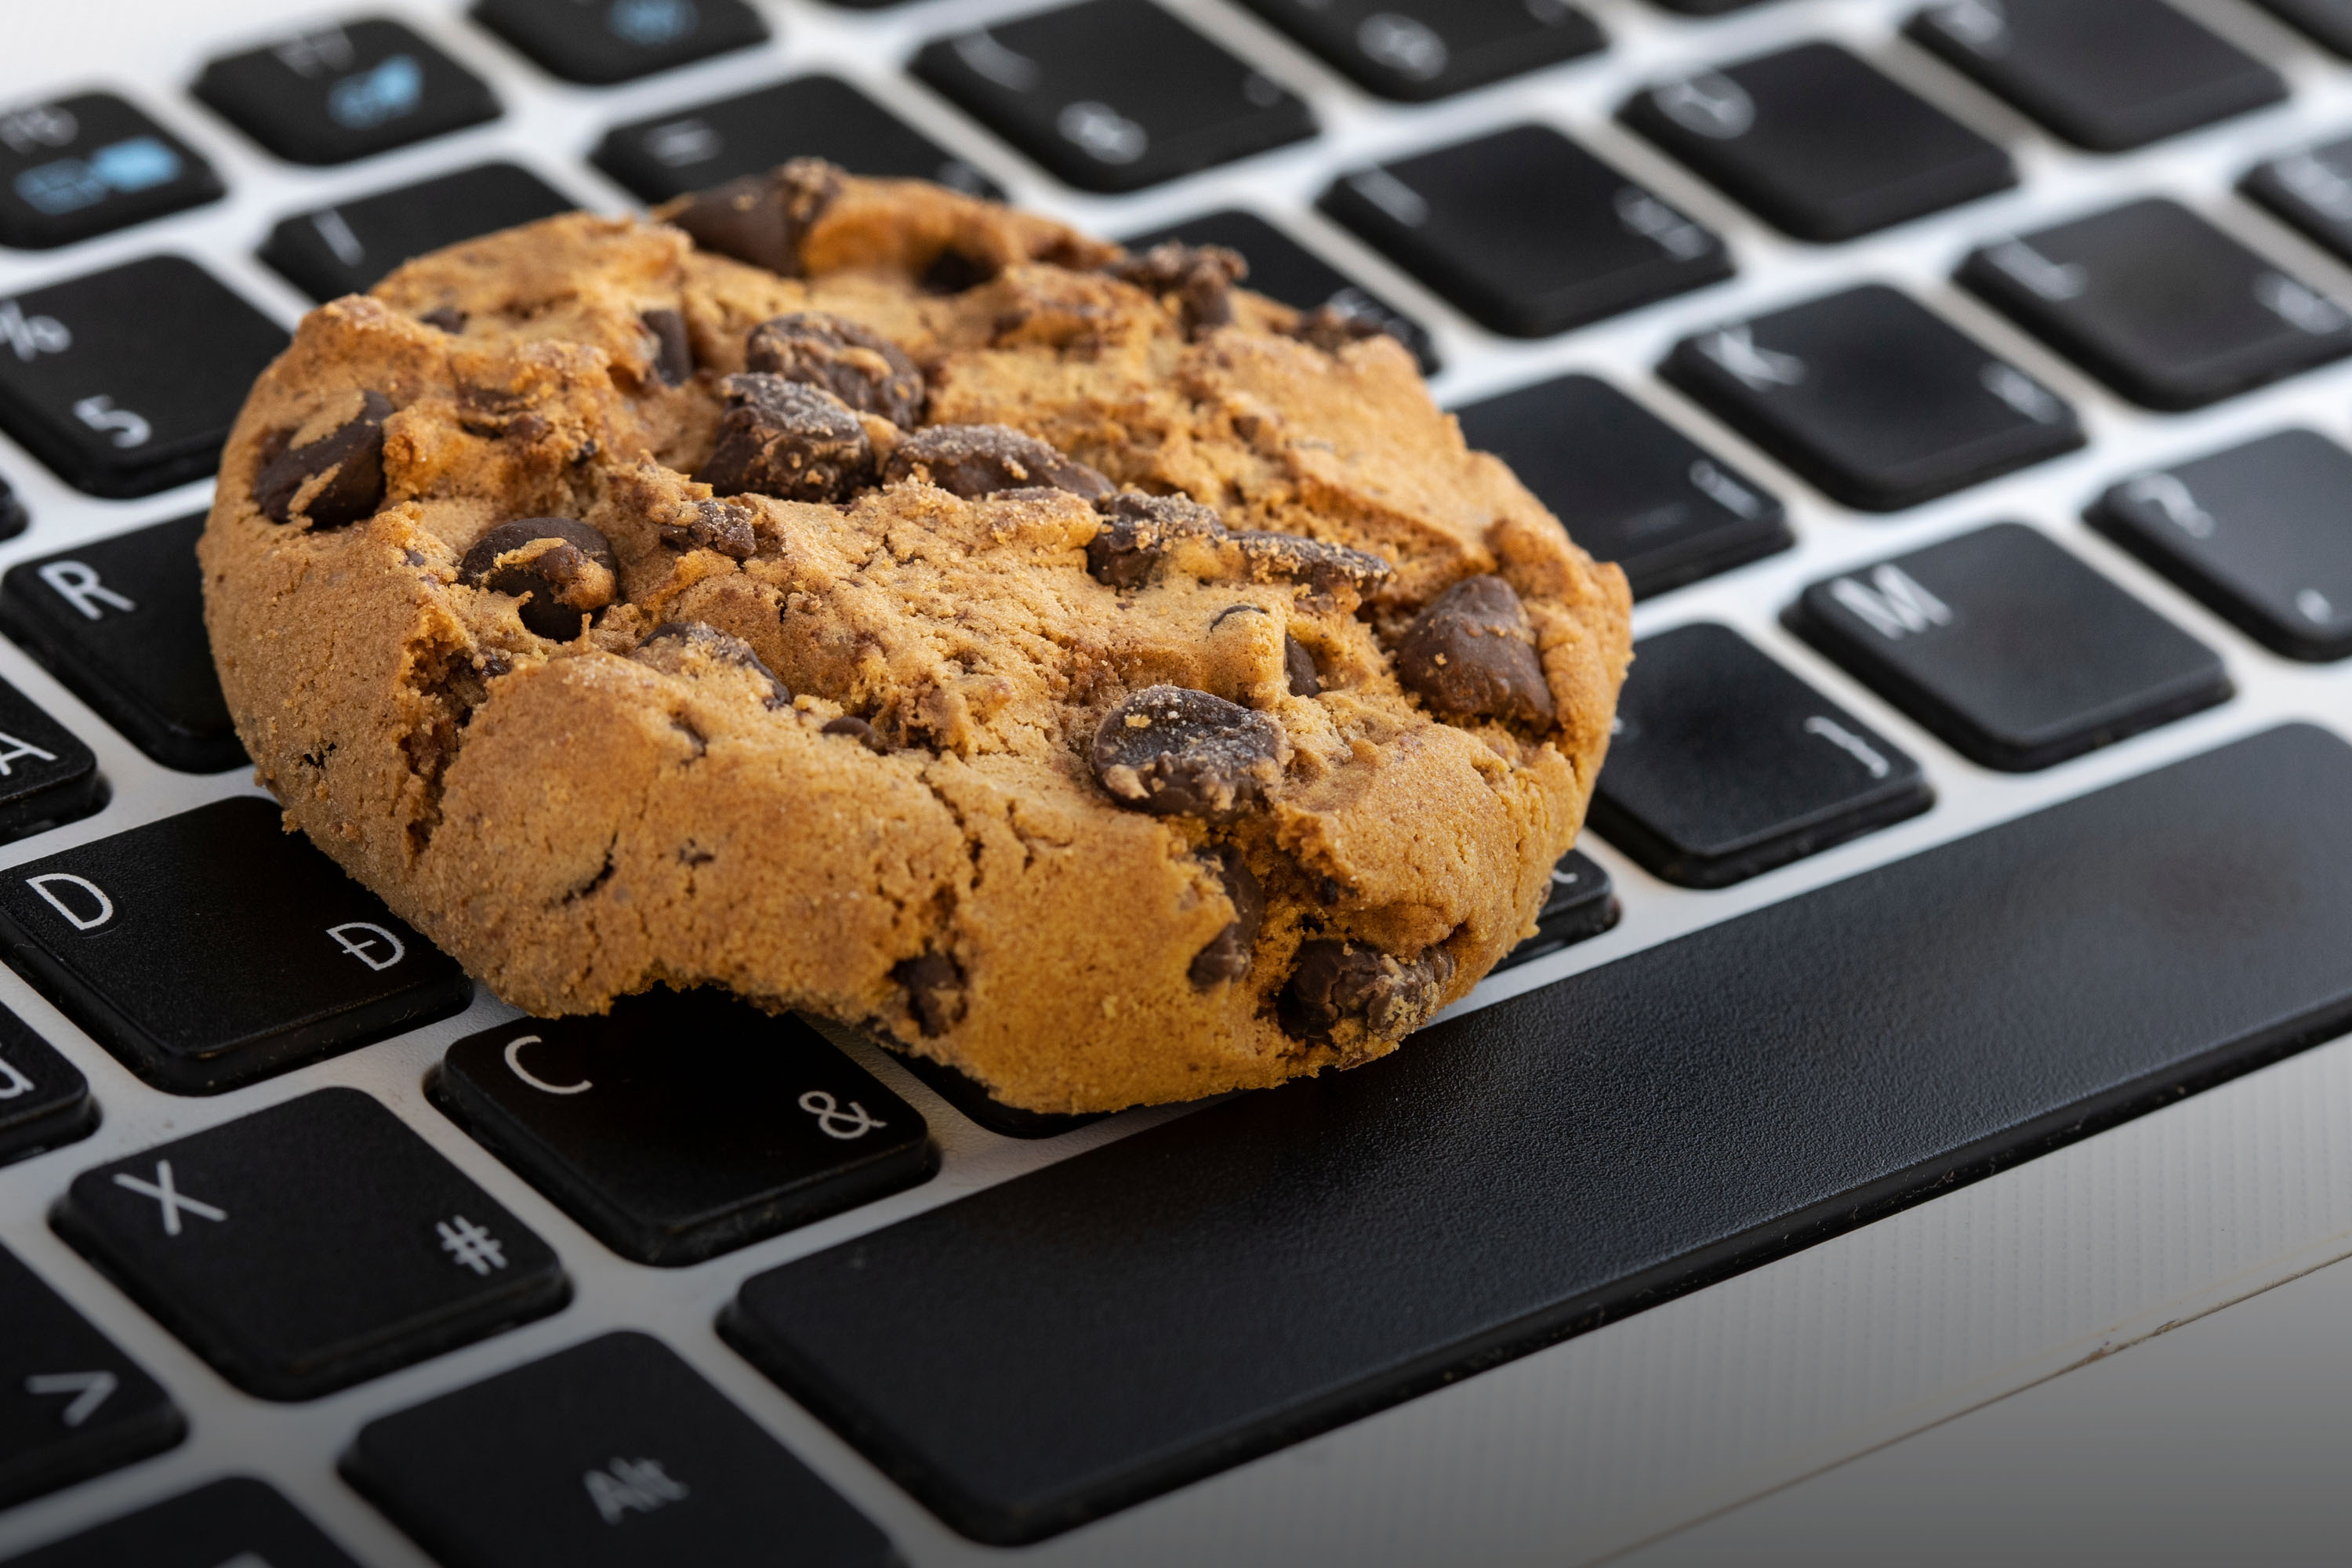 Cookies на компьютер. Cookies в интернете. Клавиатура с печеньками. Печеньки на клавиатуре. Печенье с шоколадом.